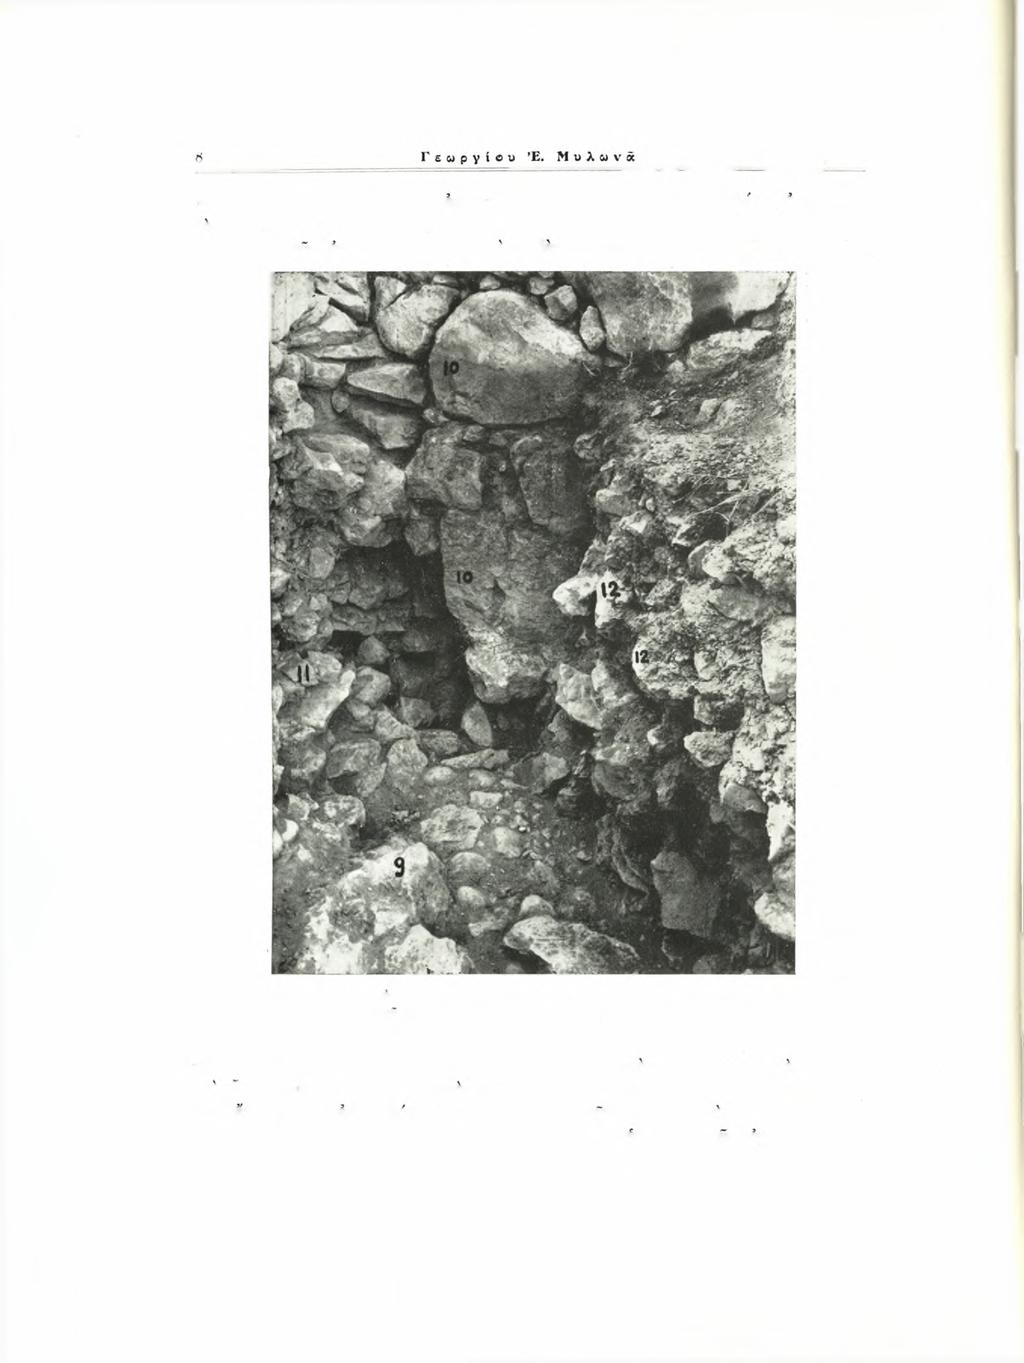 AE 1962 πειον τείχος είχε θεμελιωθή επί τής όφρΰος τοϋ λόφου, τοϋ όποιου ακολουθεί τον σχηματισμόν τοΰ πετρώματος. Πέραν των ογκολίθων άρ.